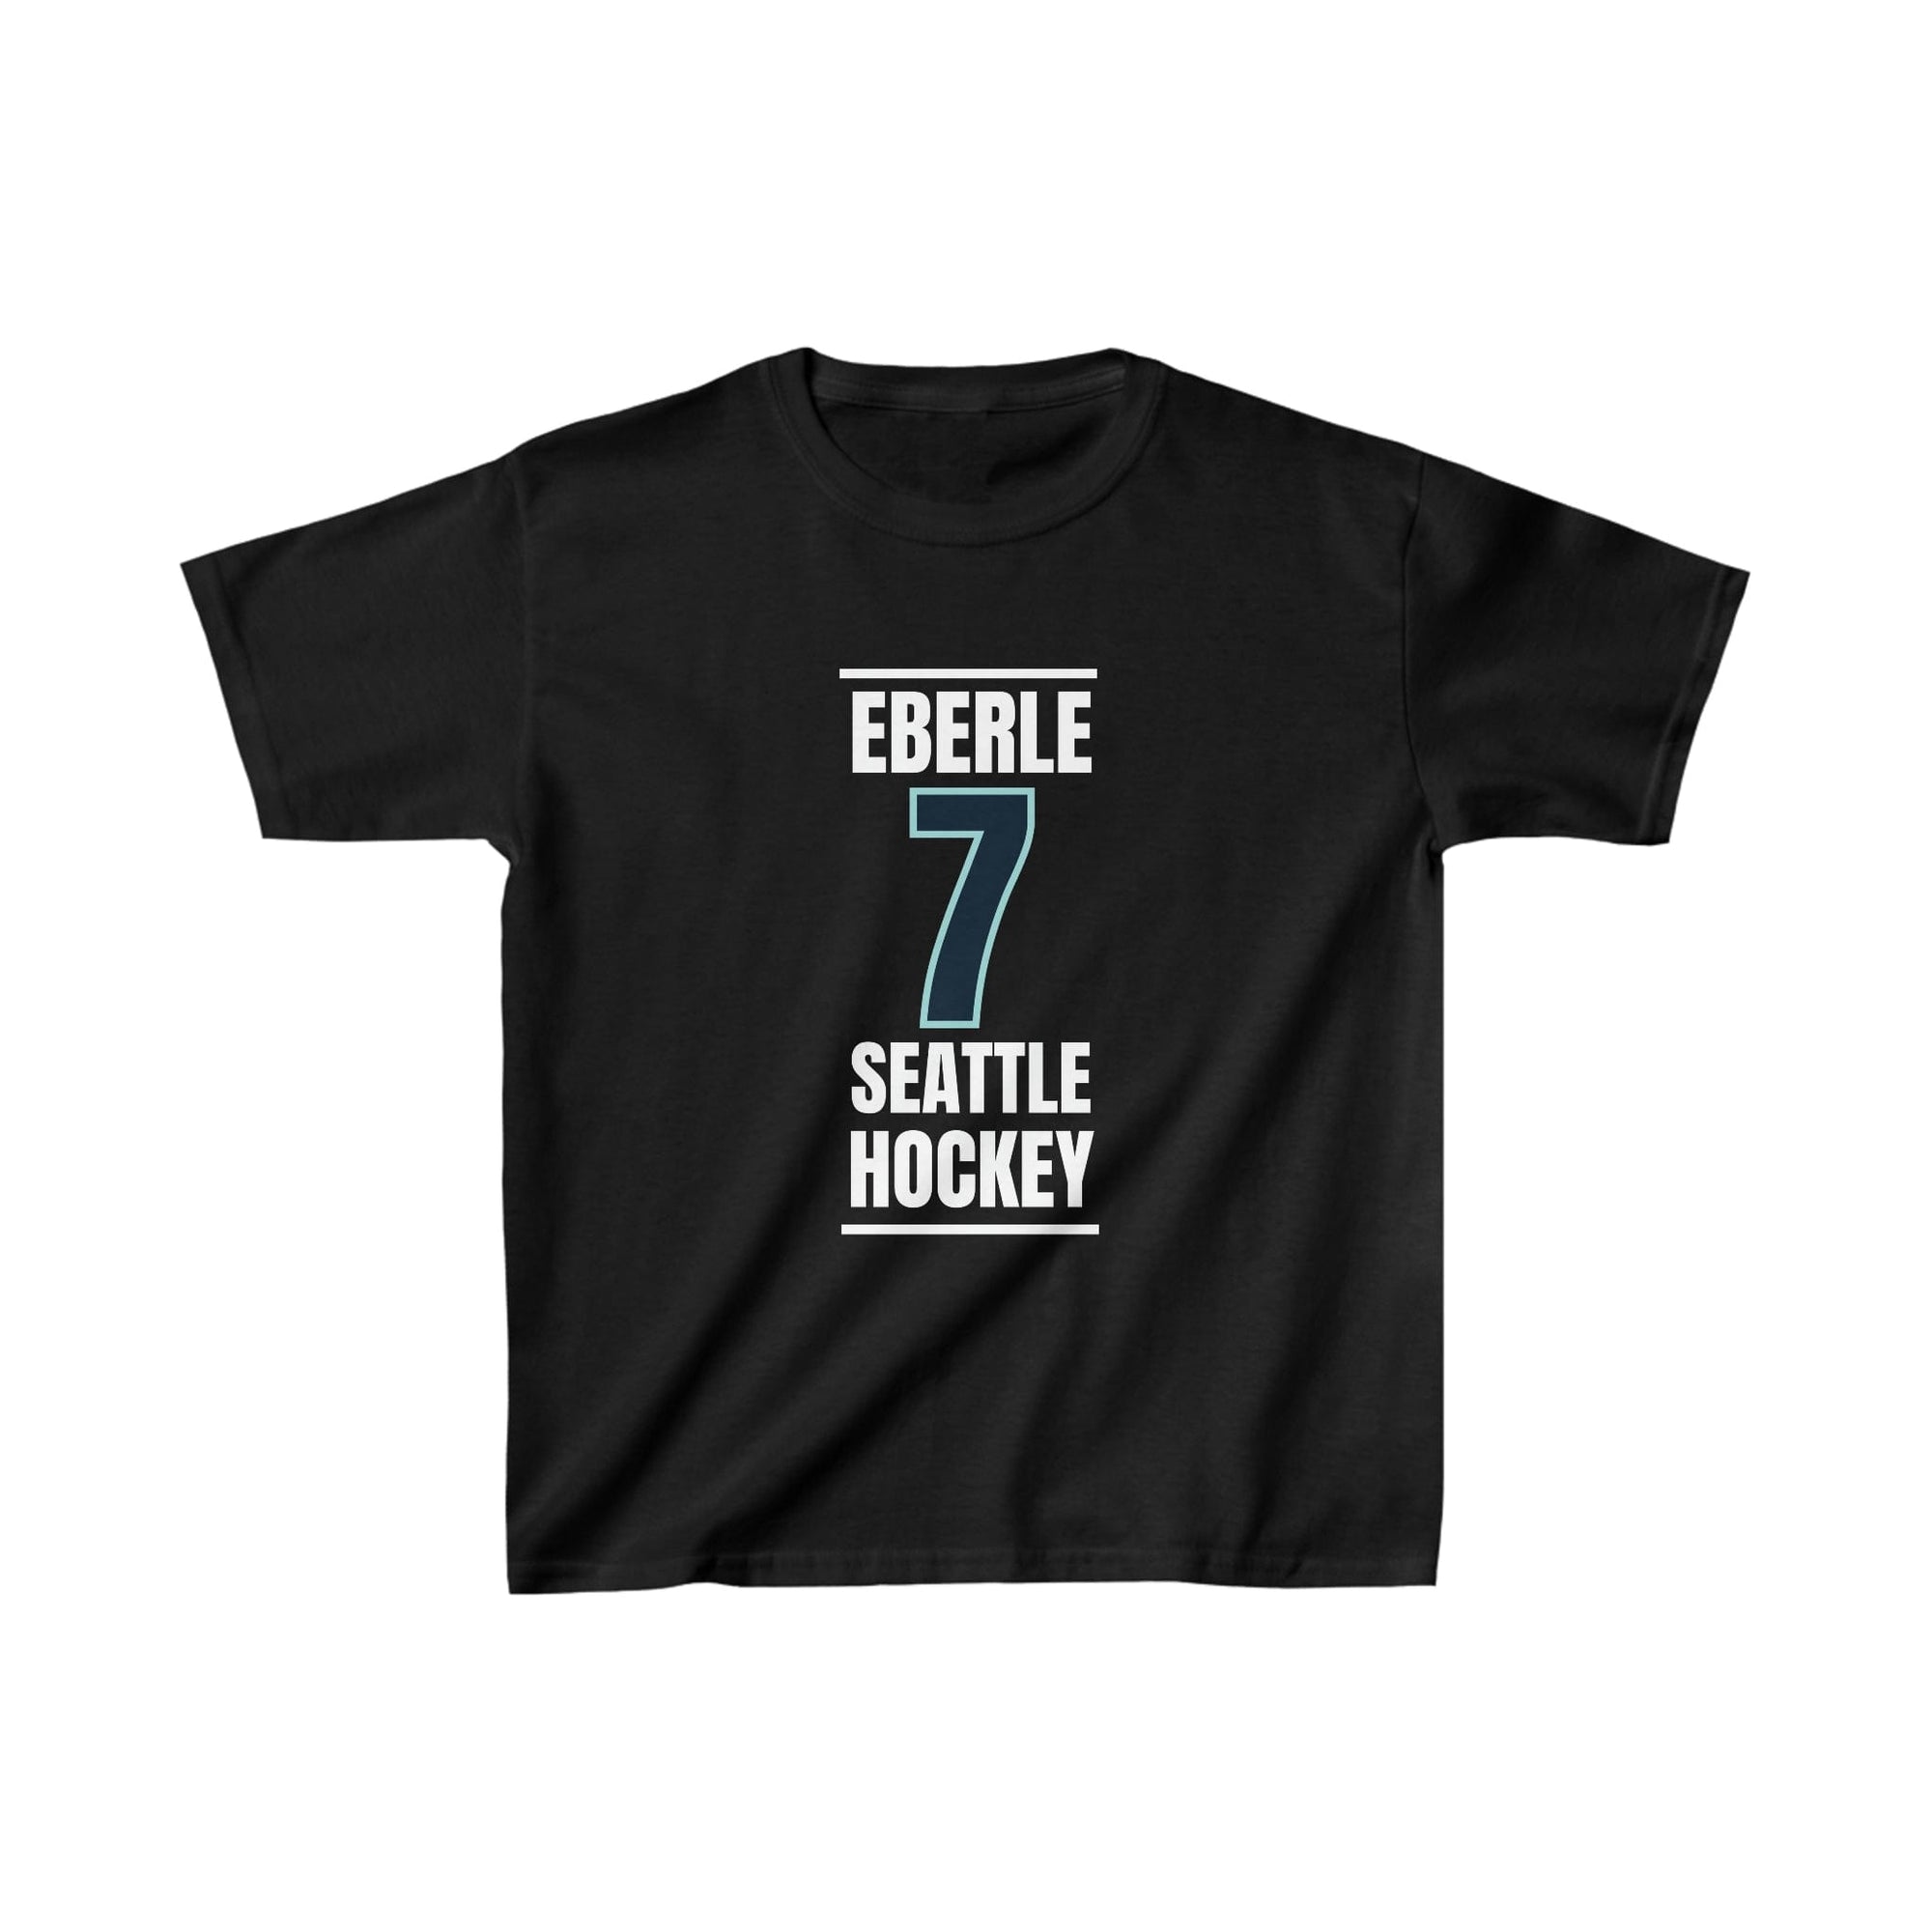 Kids clothes Eberle 7 Seattle Hockey Black Vertical Design Kids Tee